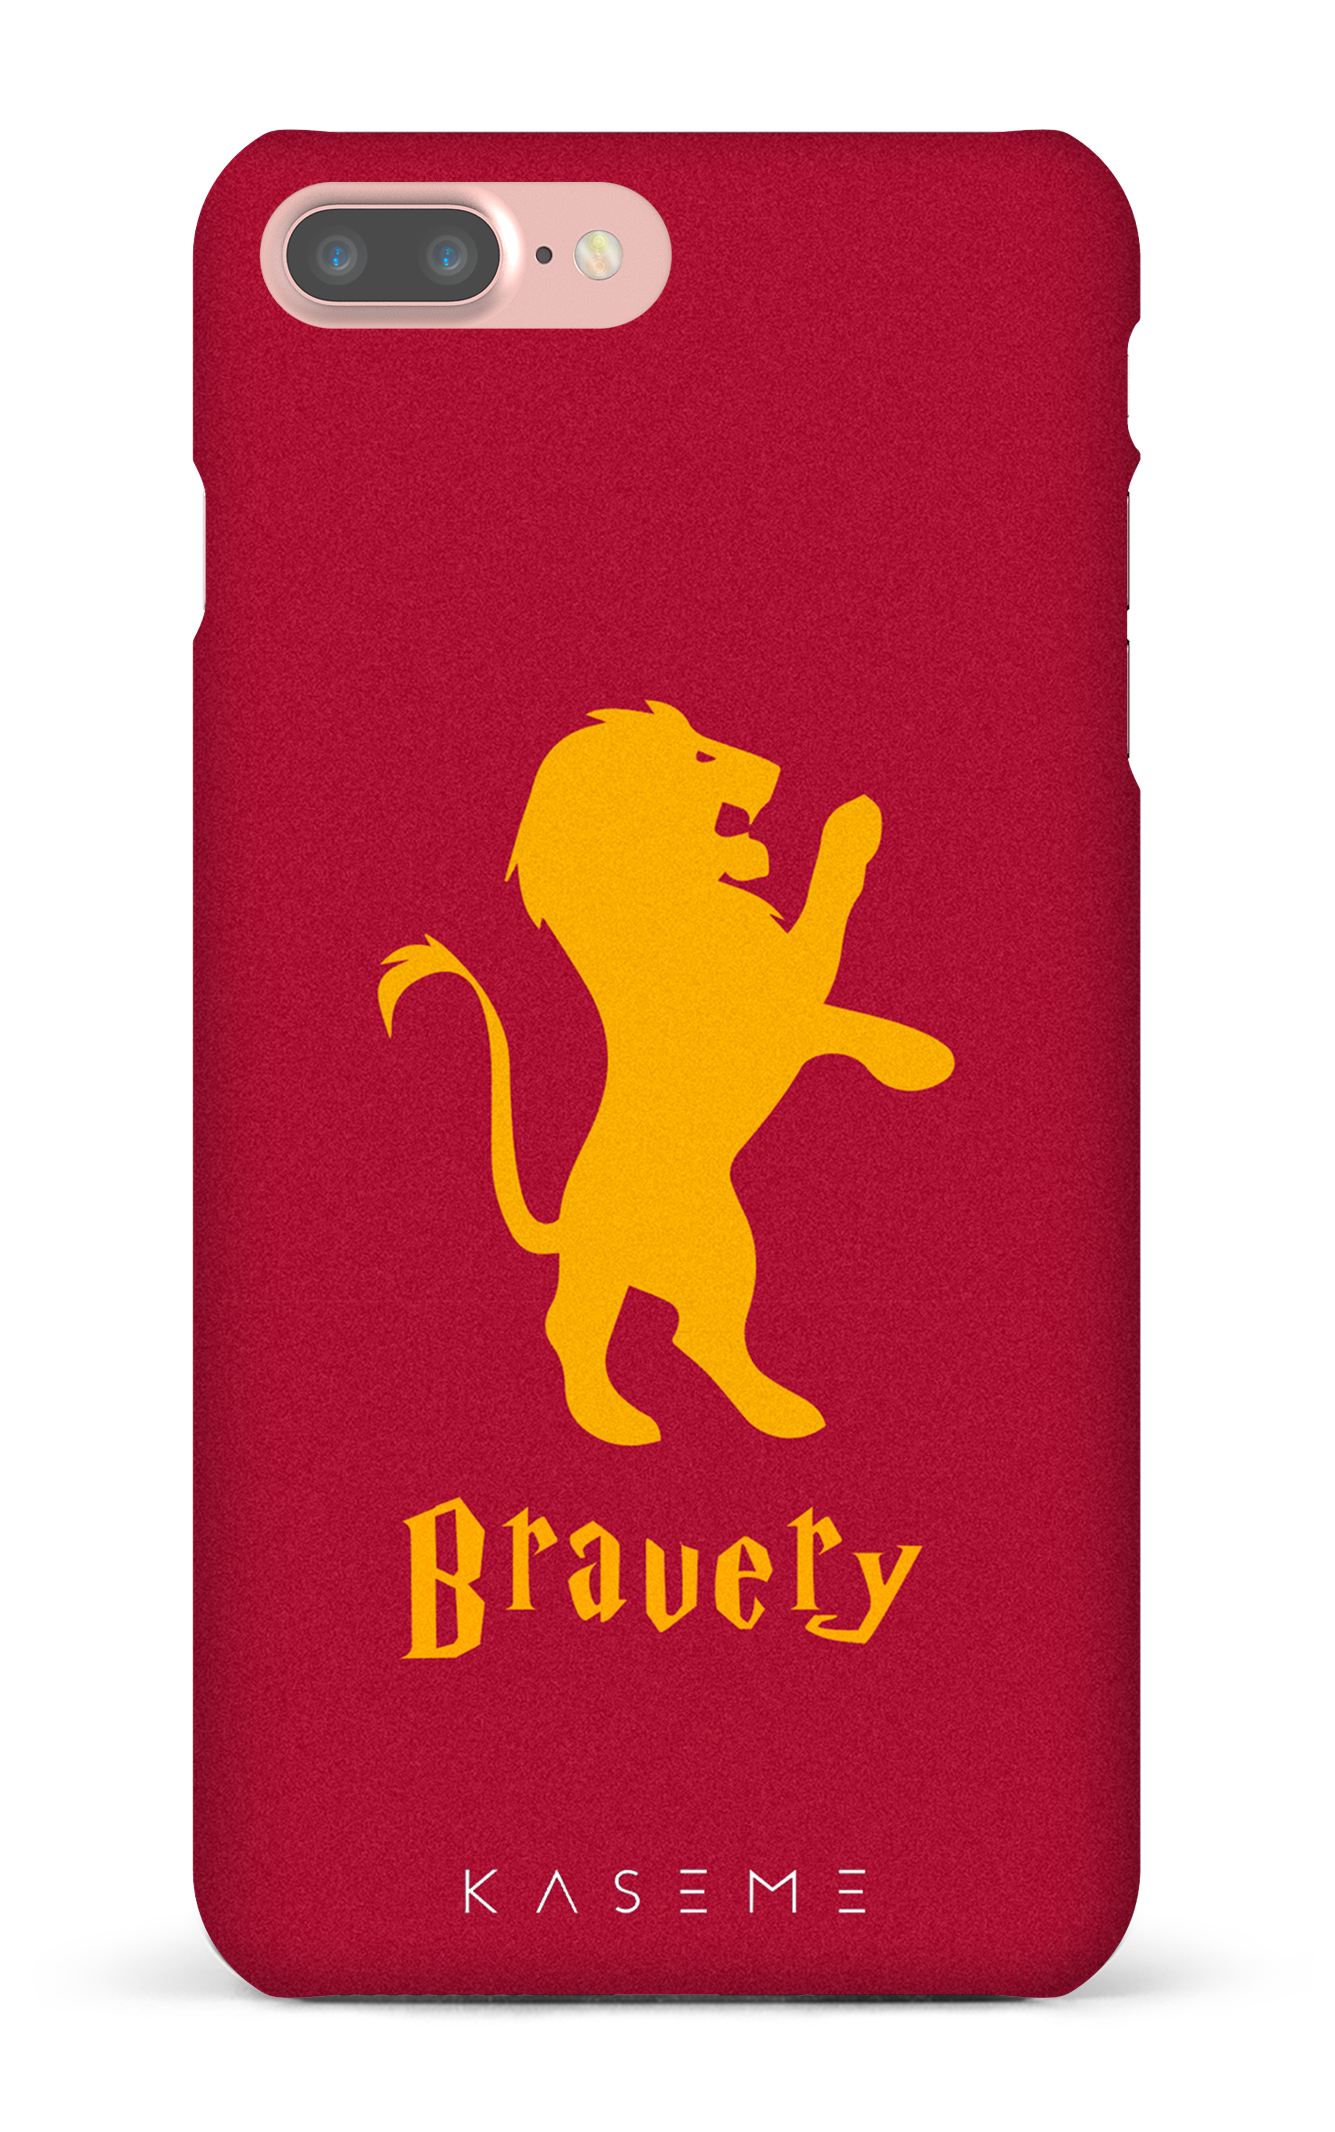 Bravery - iPhone 7 Plus